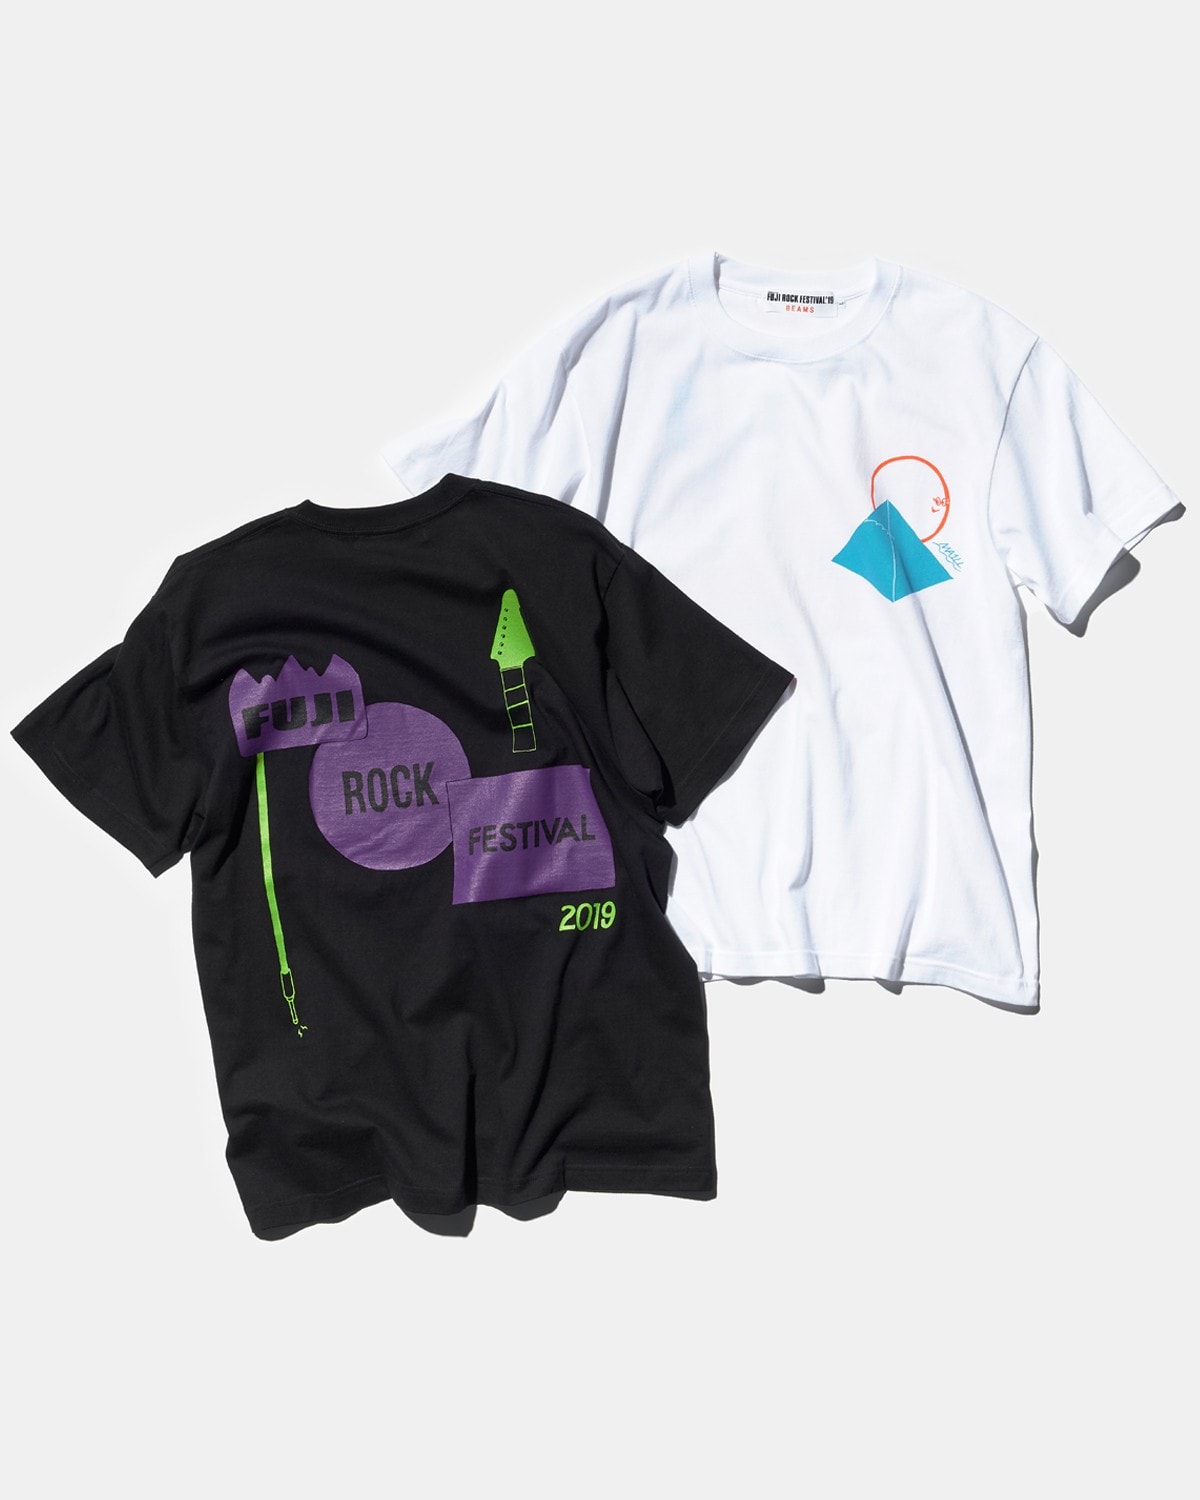 BEAMS x Fuji Rock 2019 聯名限定 T-Shirt 系列登場